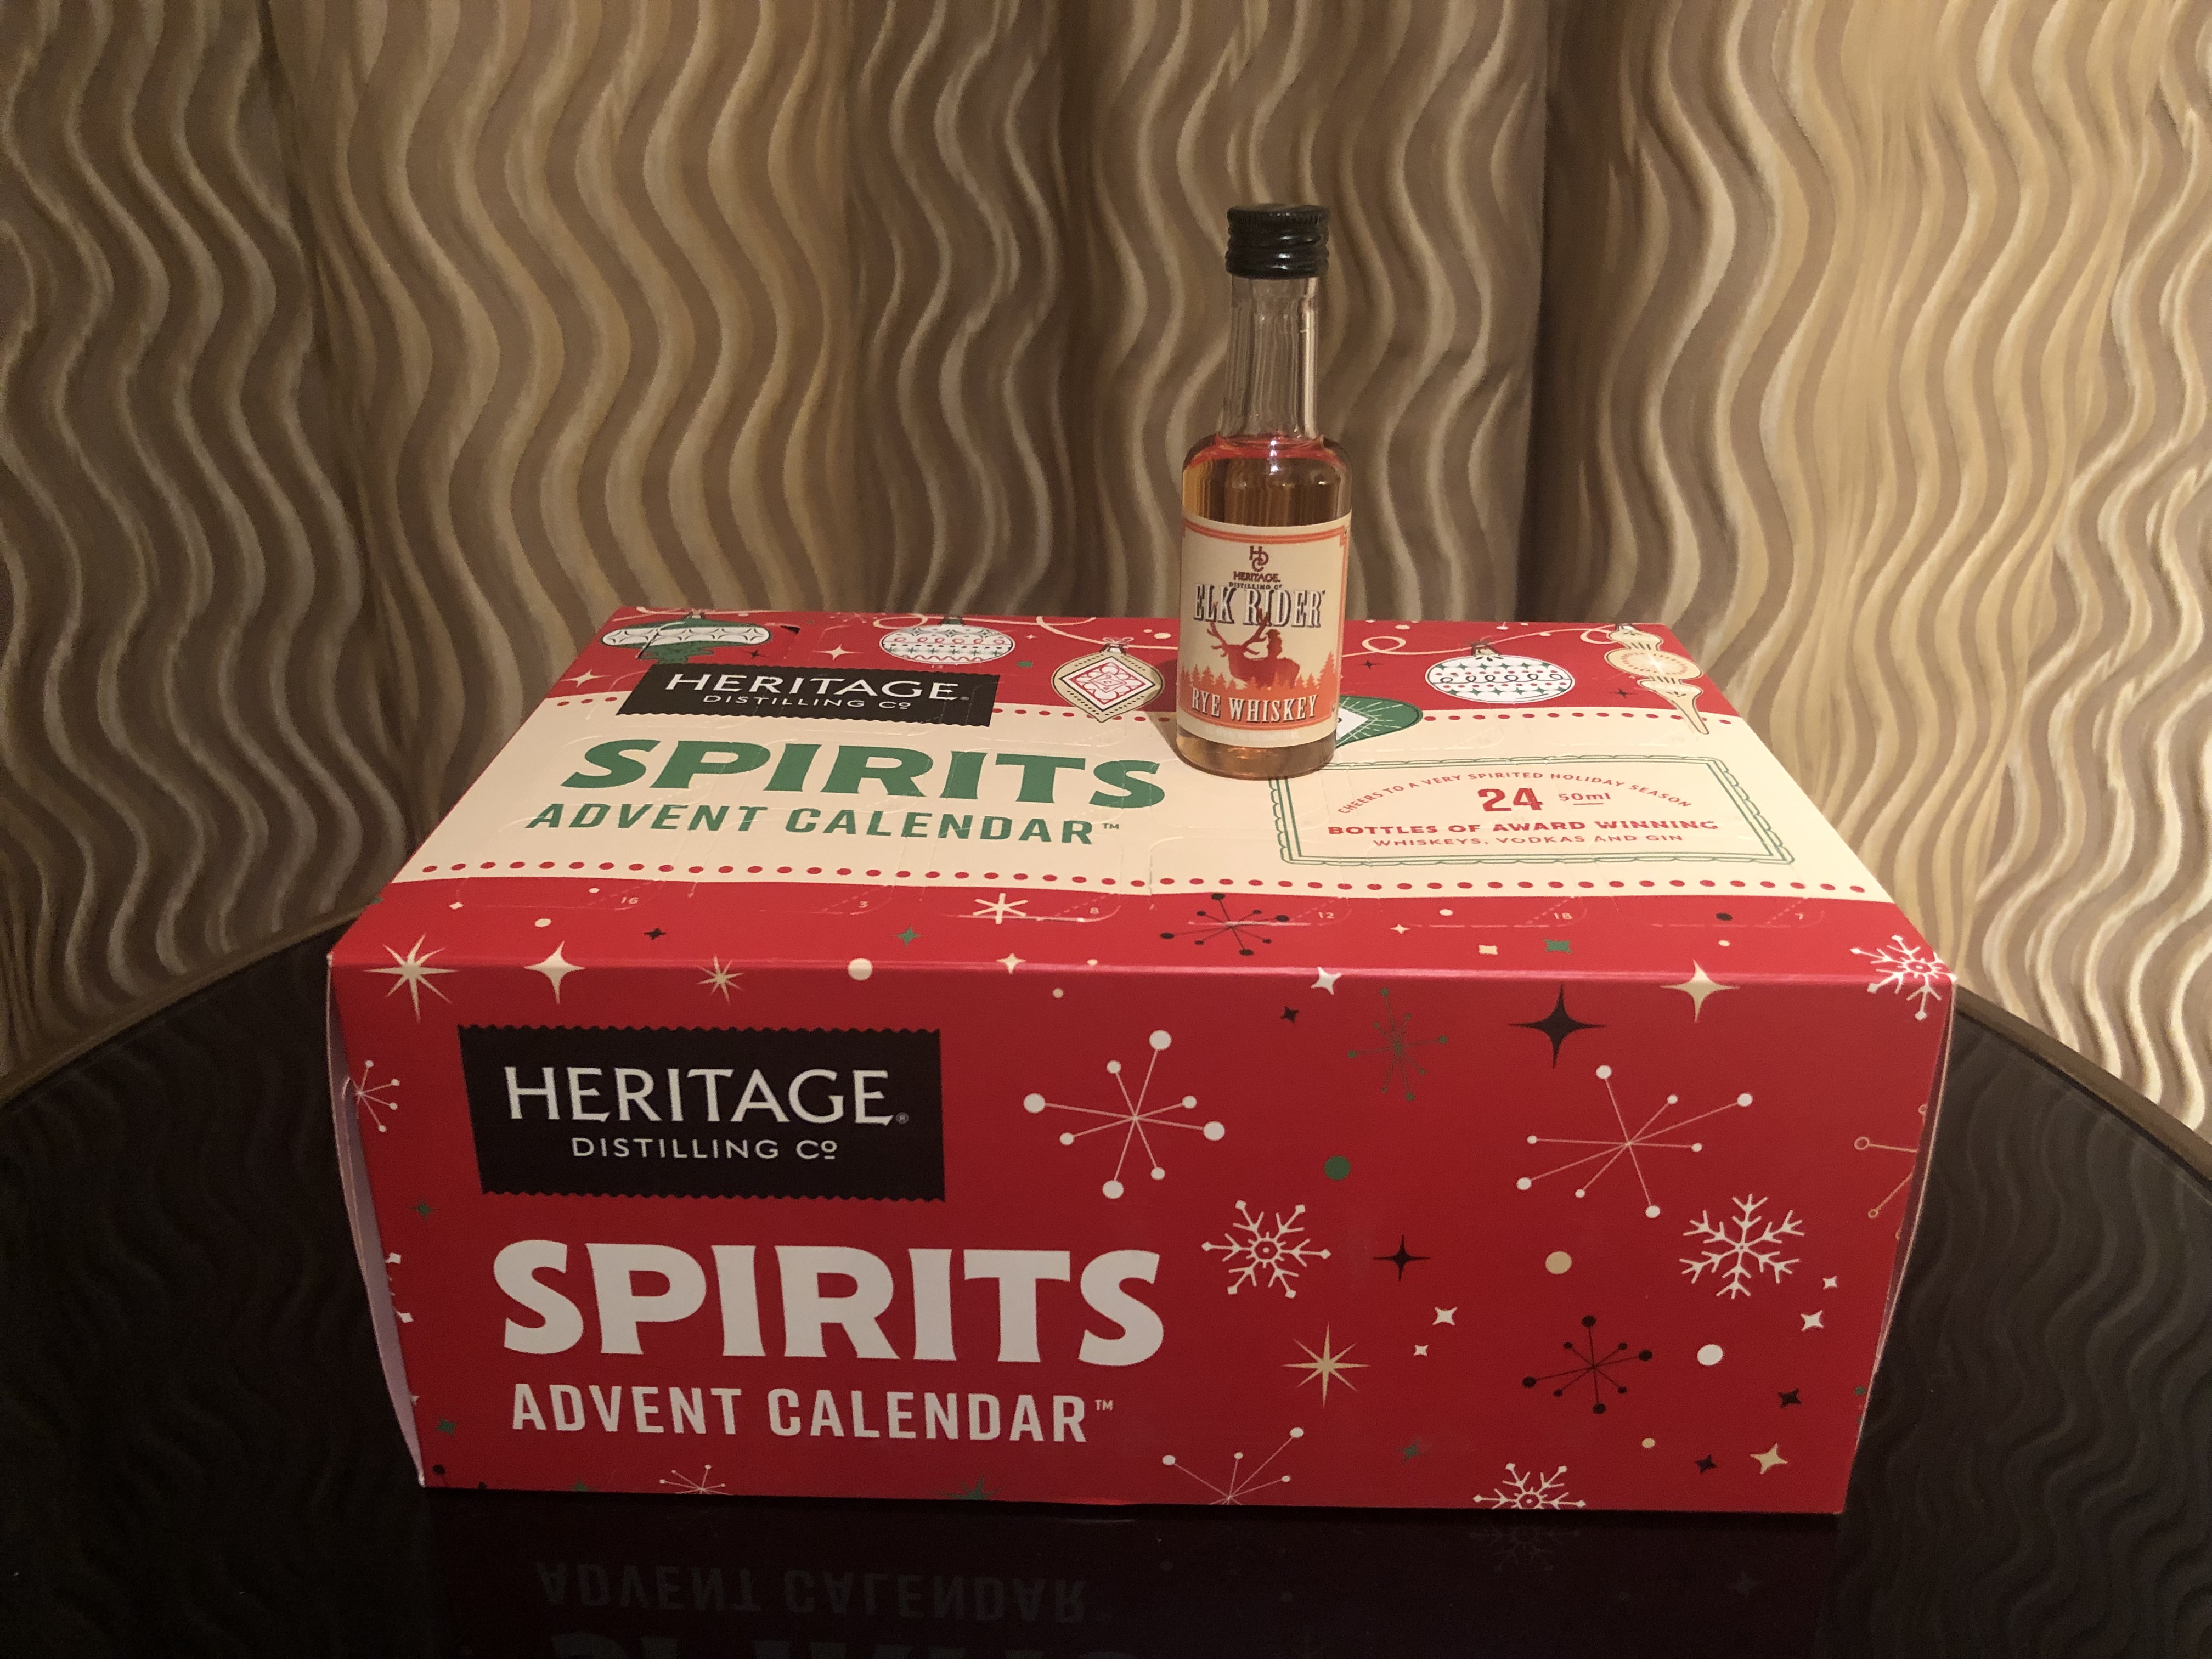 Elk Rider Rye Whiskey, one of the spirits in the Heritage Distilling 2018 Spirits Advent Calendar.